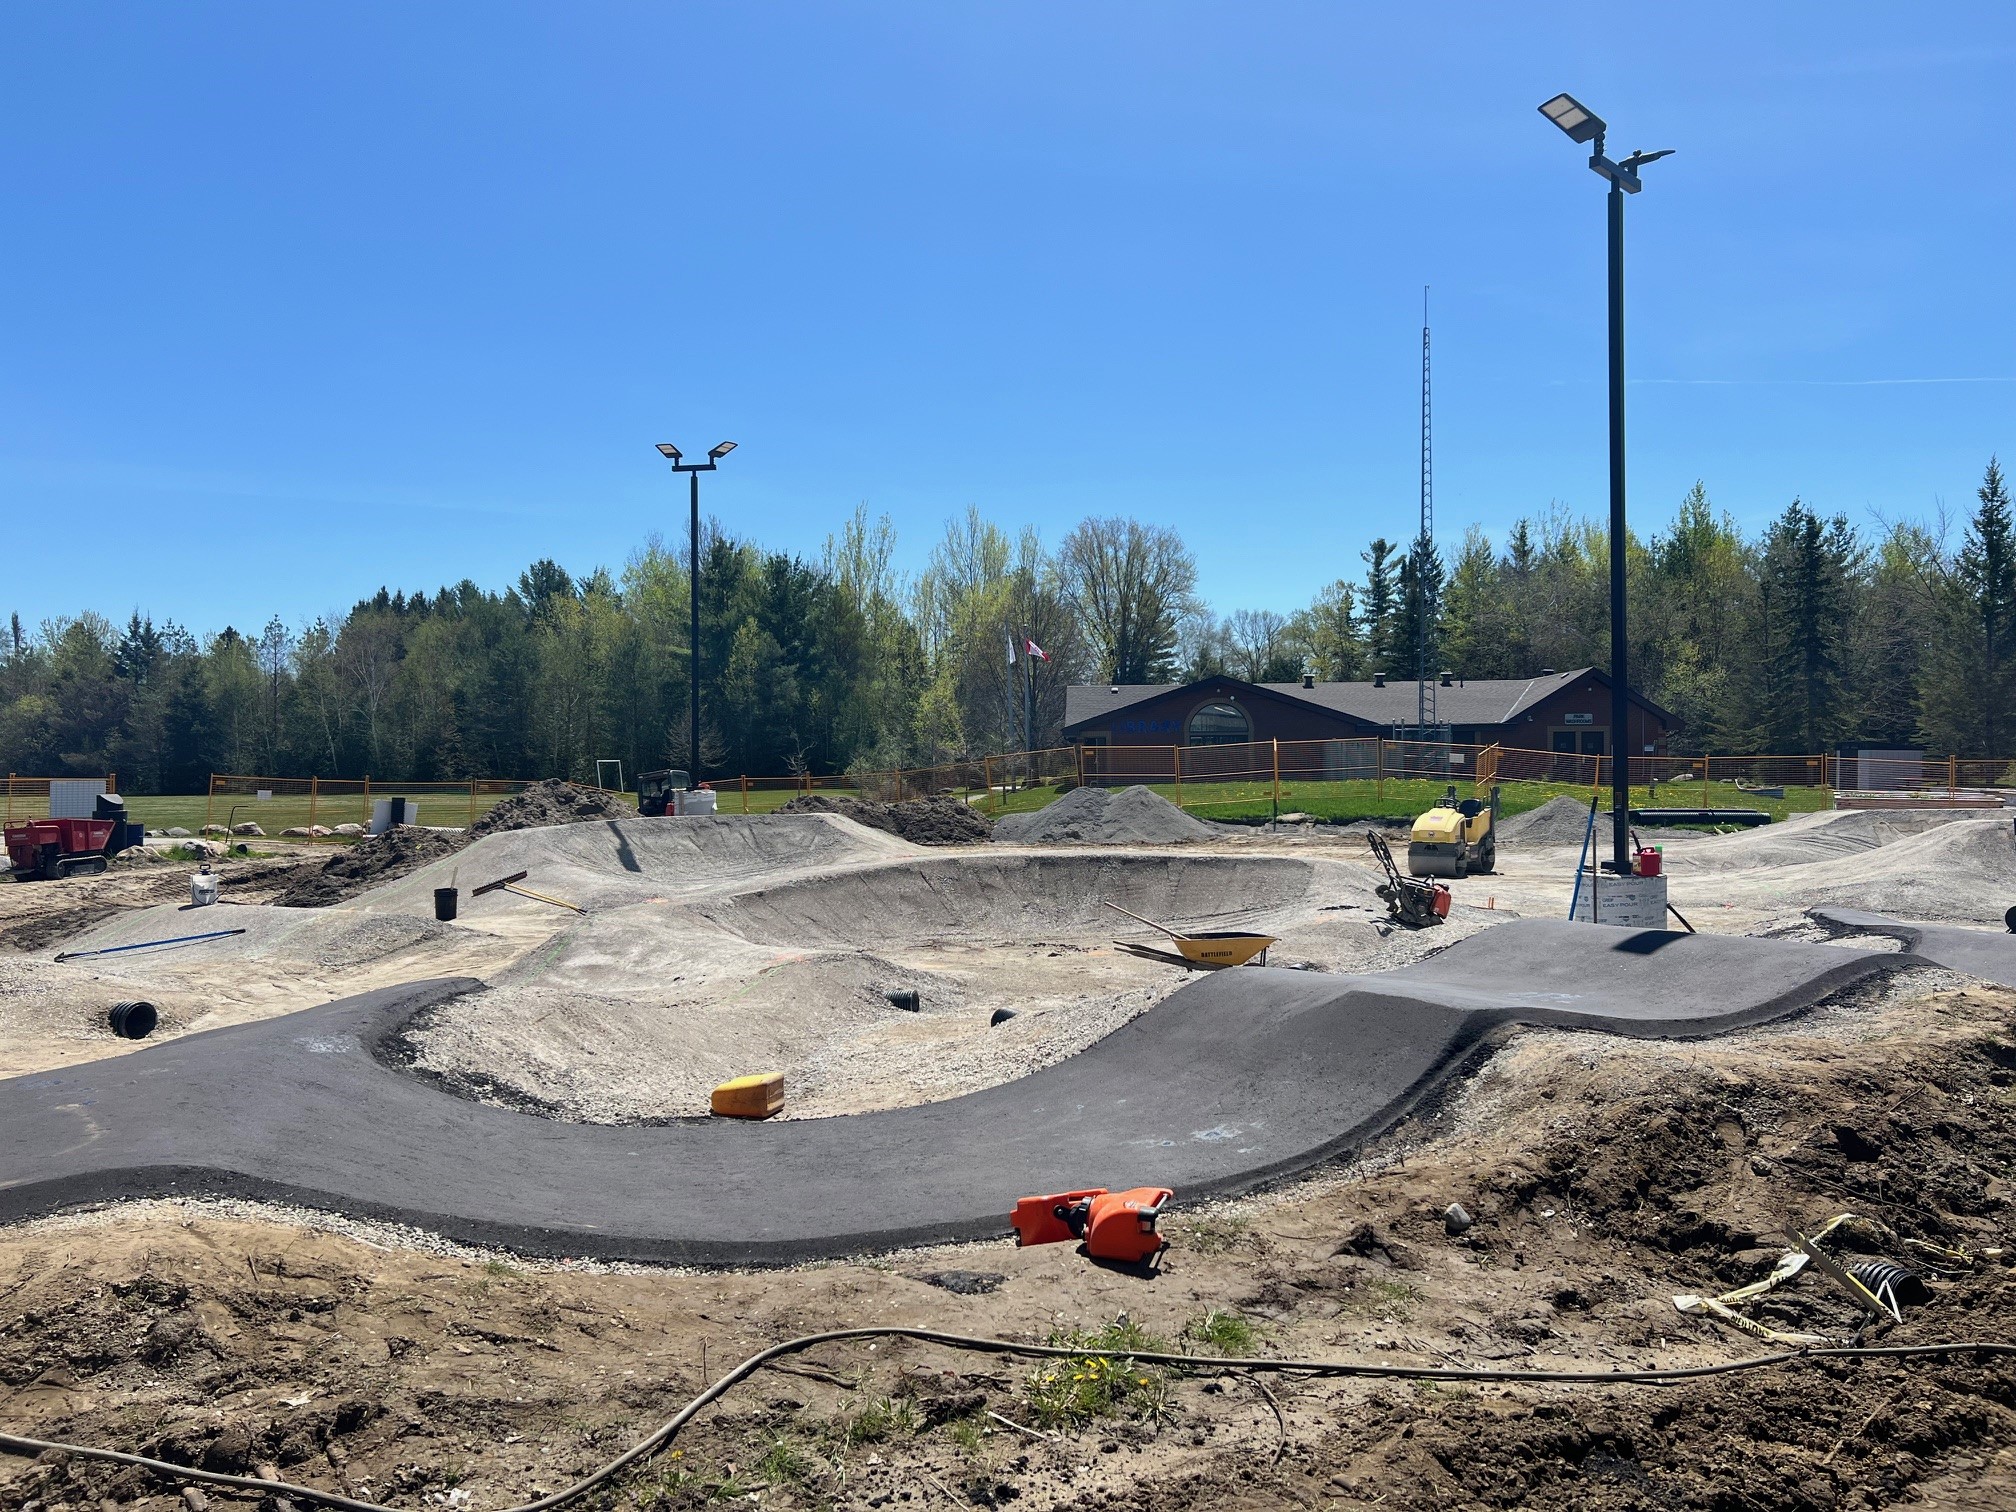 skate park under construction